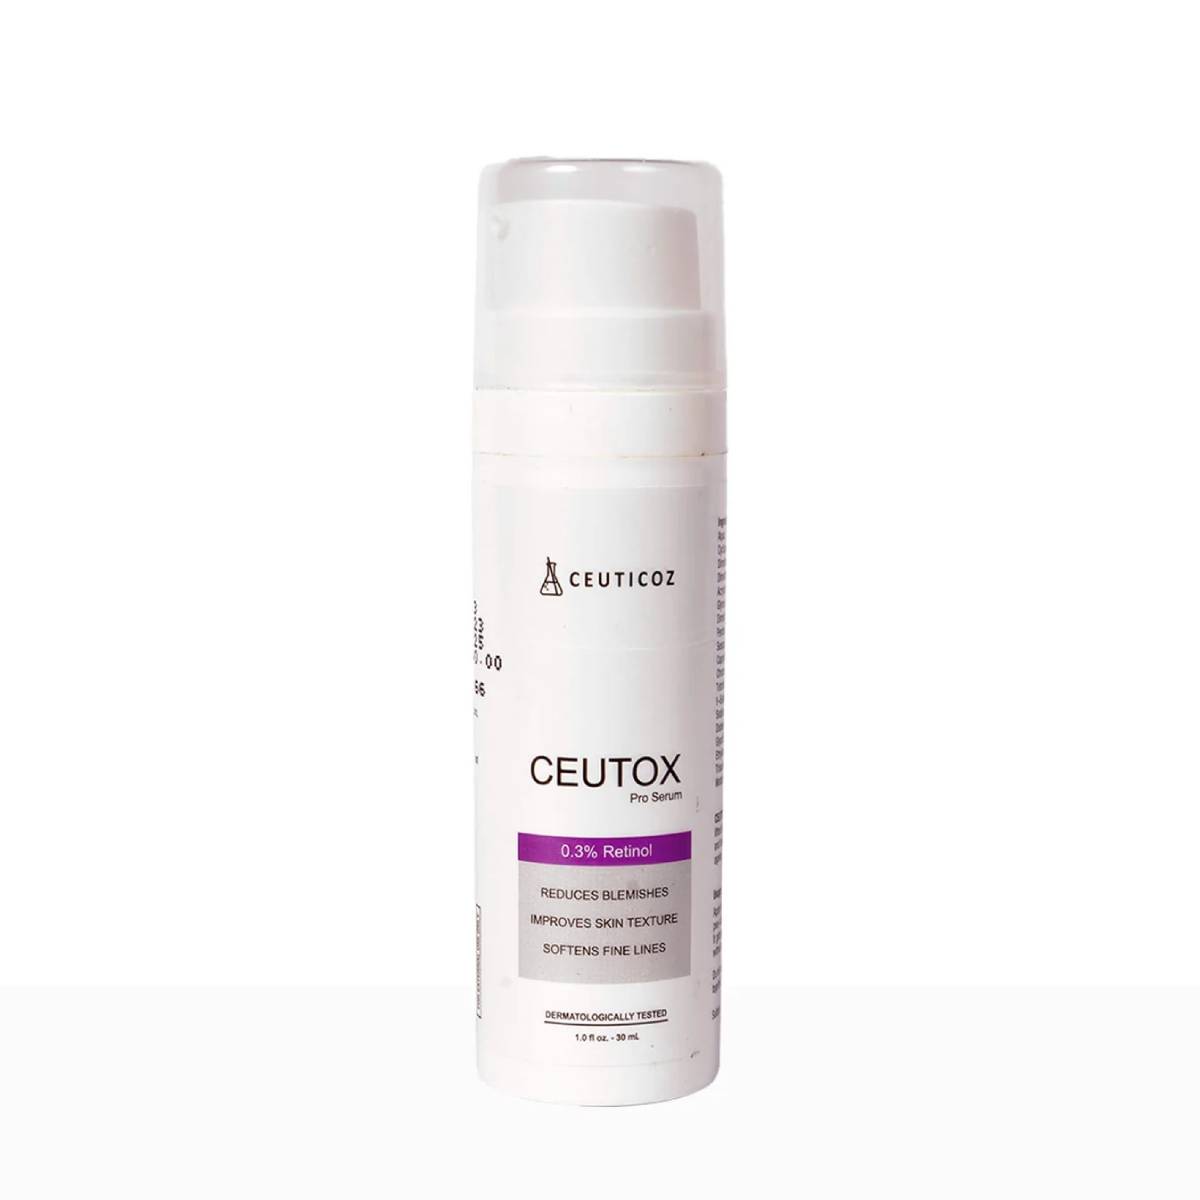 Ceutox Pro Retinol 0.3% Serum